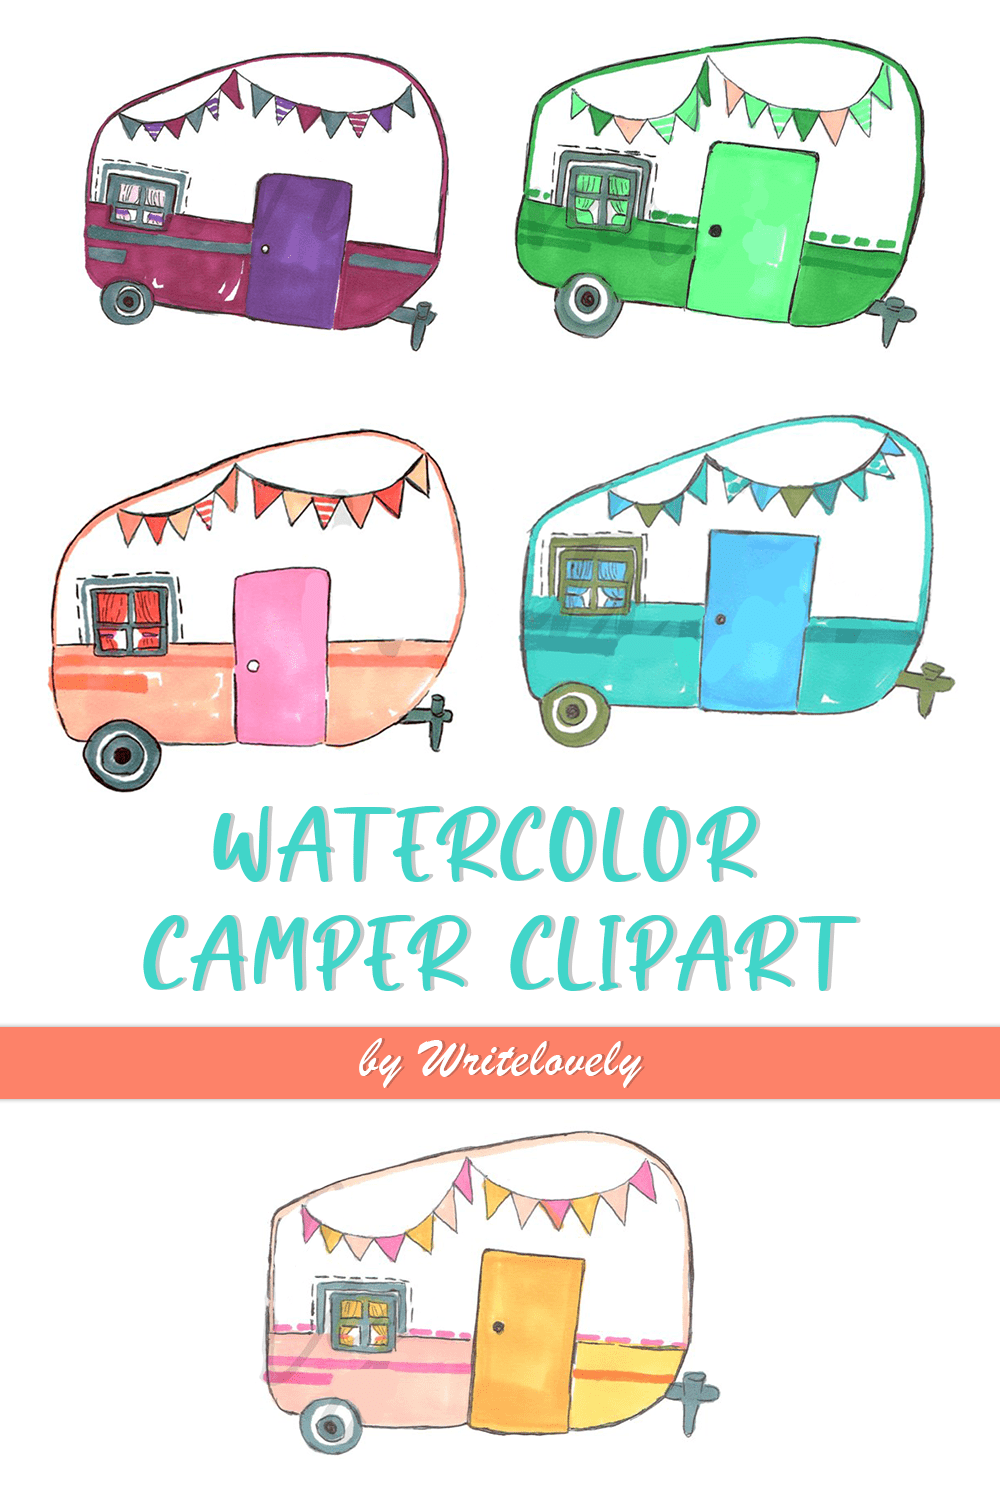 Watercolor Camper Clipart - pinterest image preview.